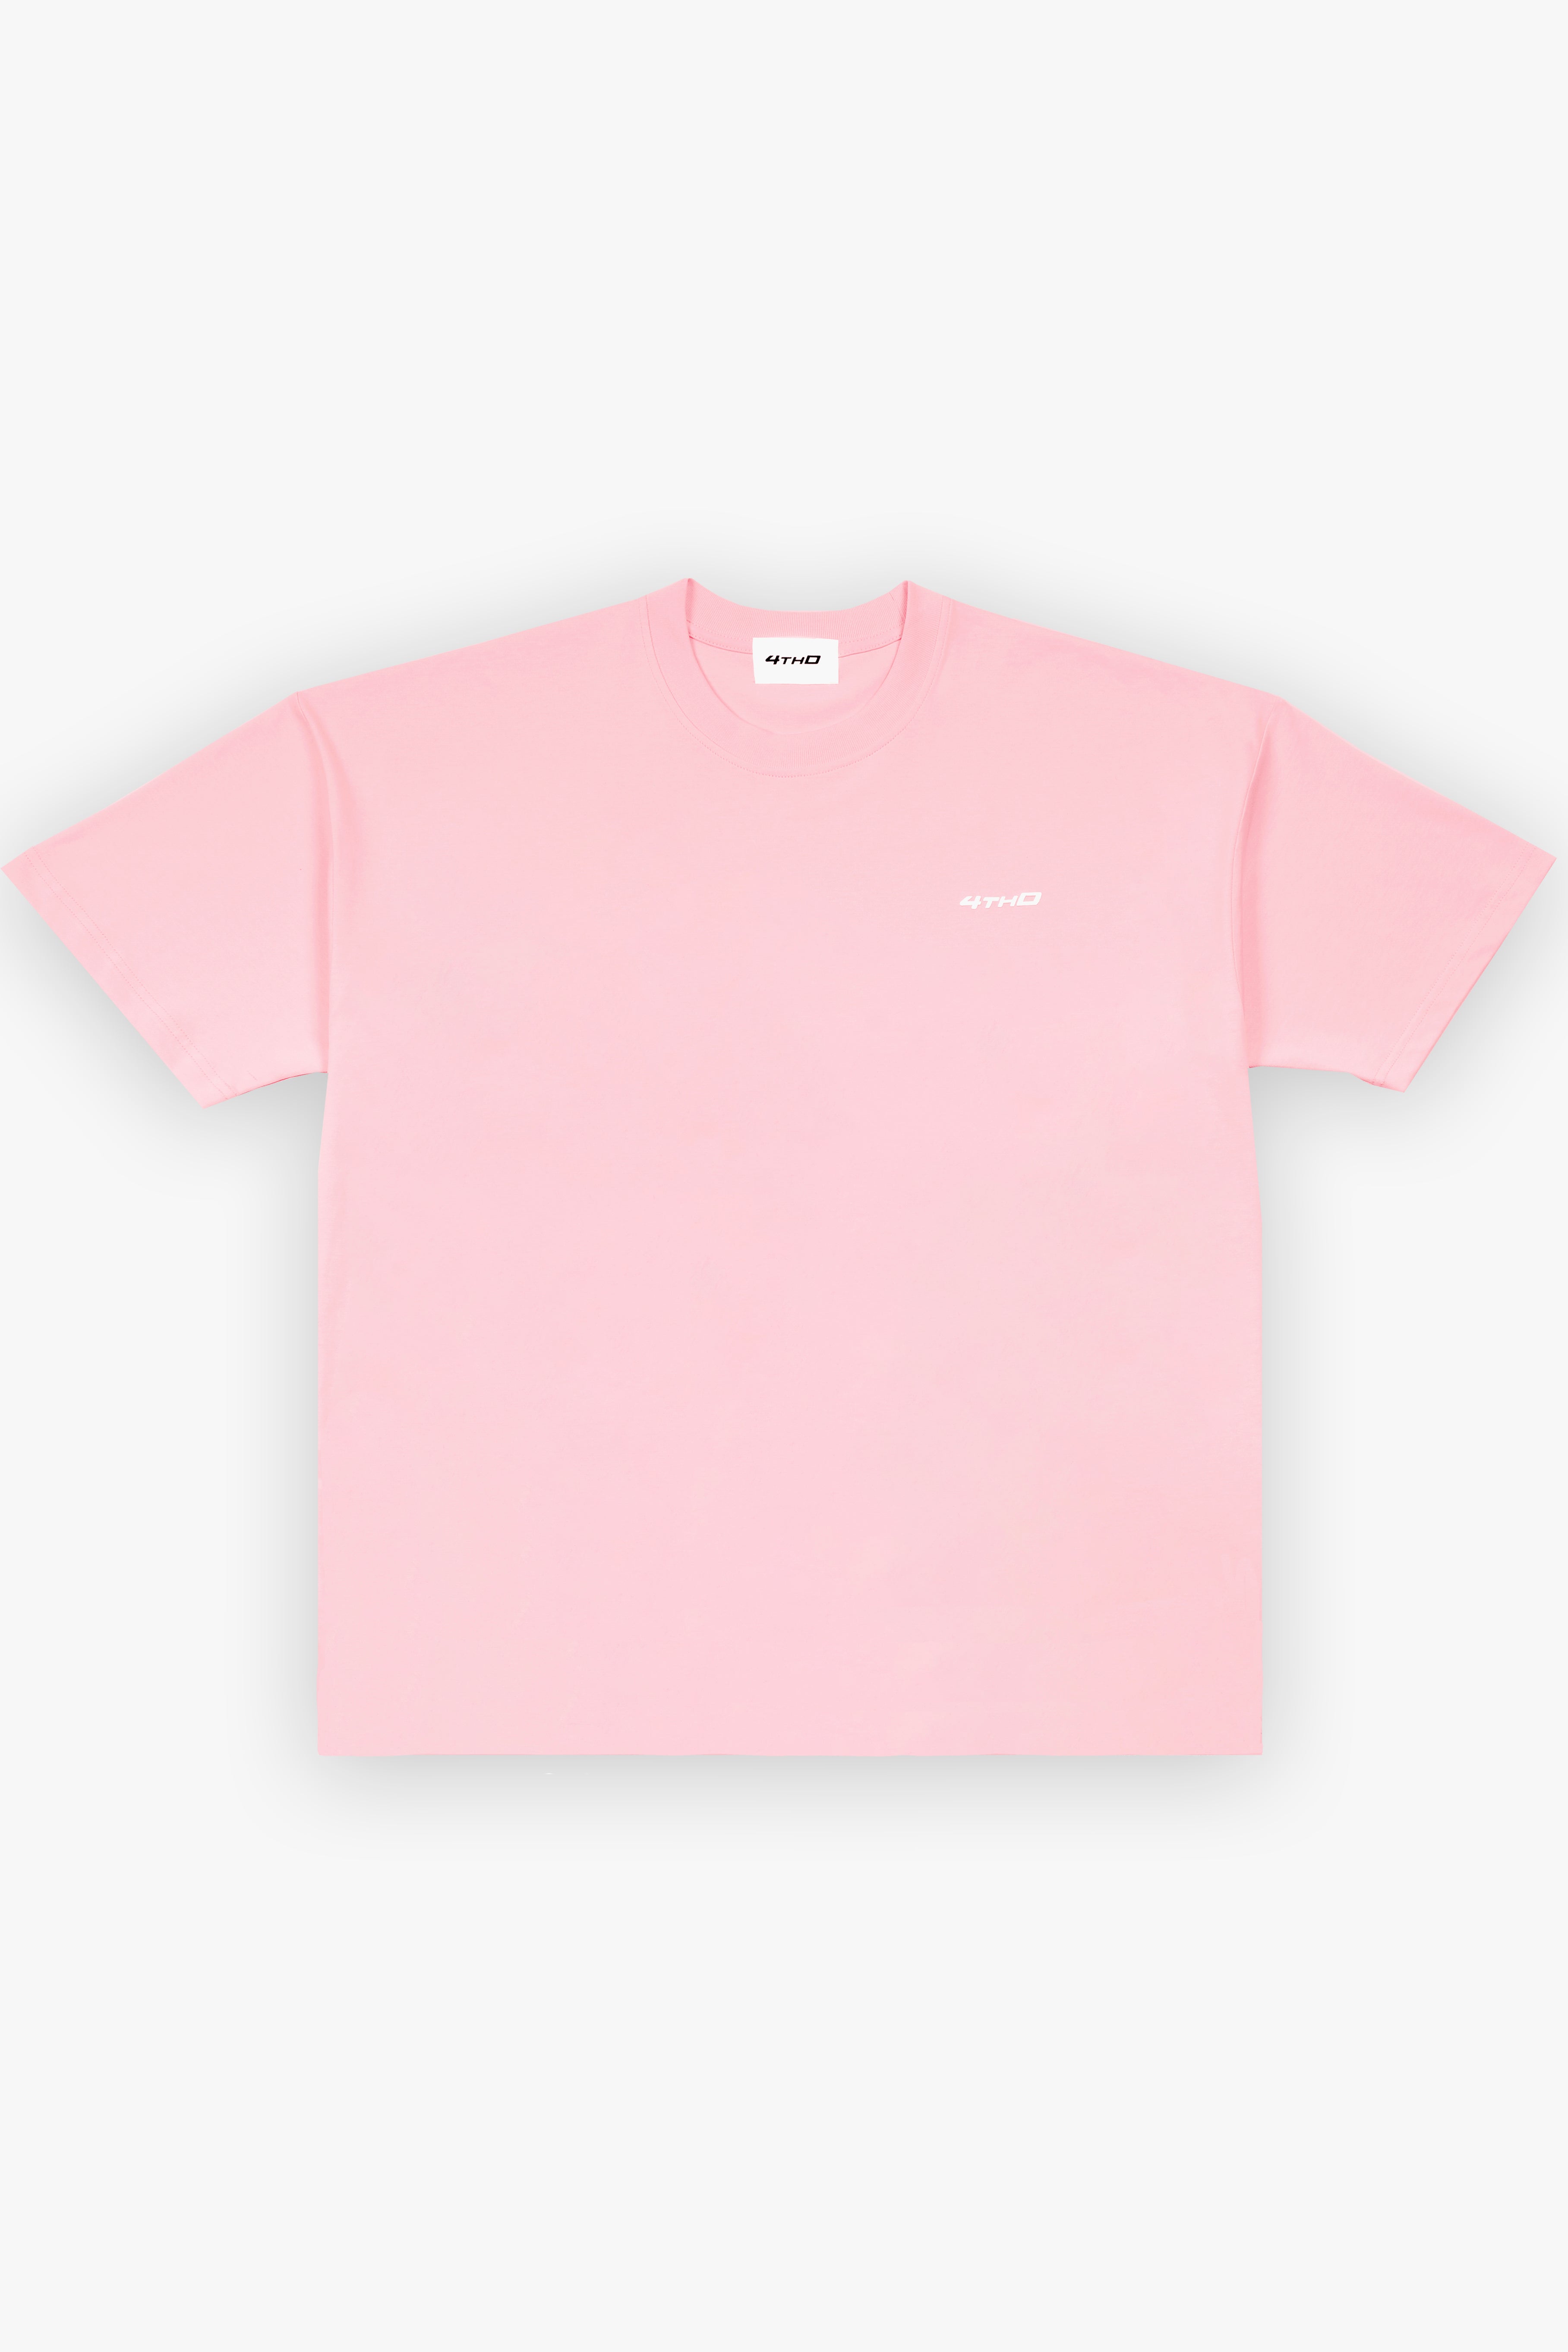 Pantone Shirt - Baby Pink